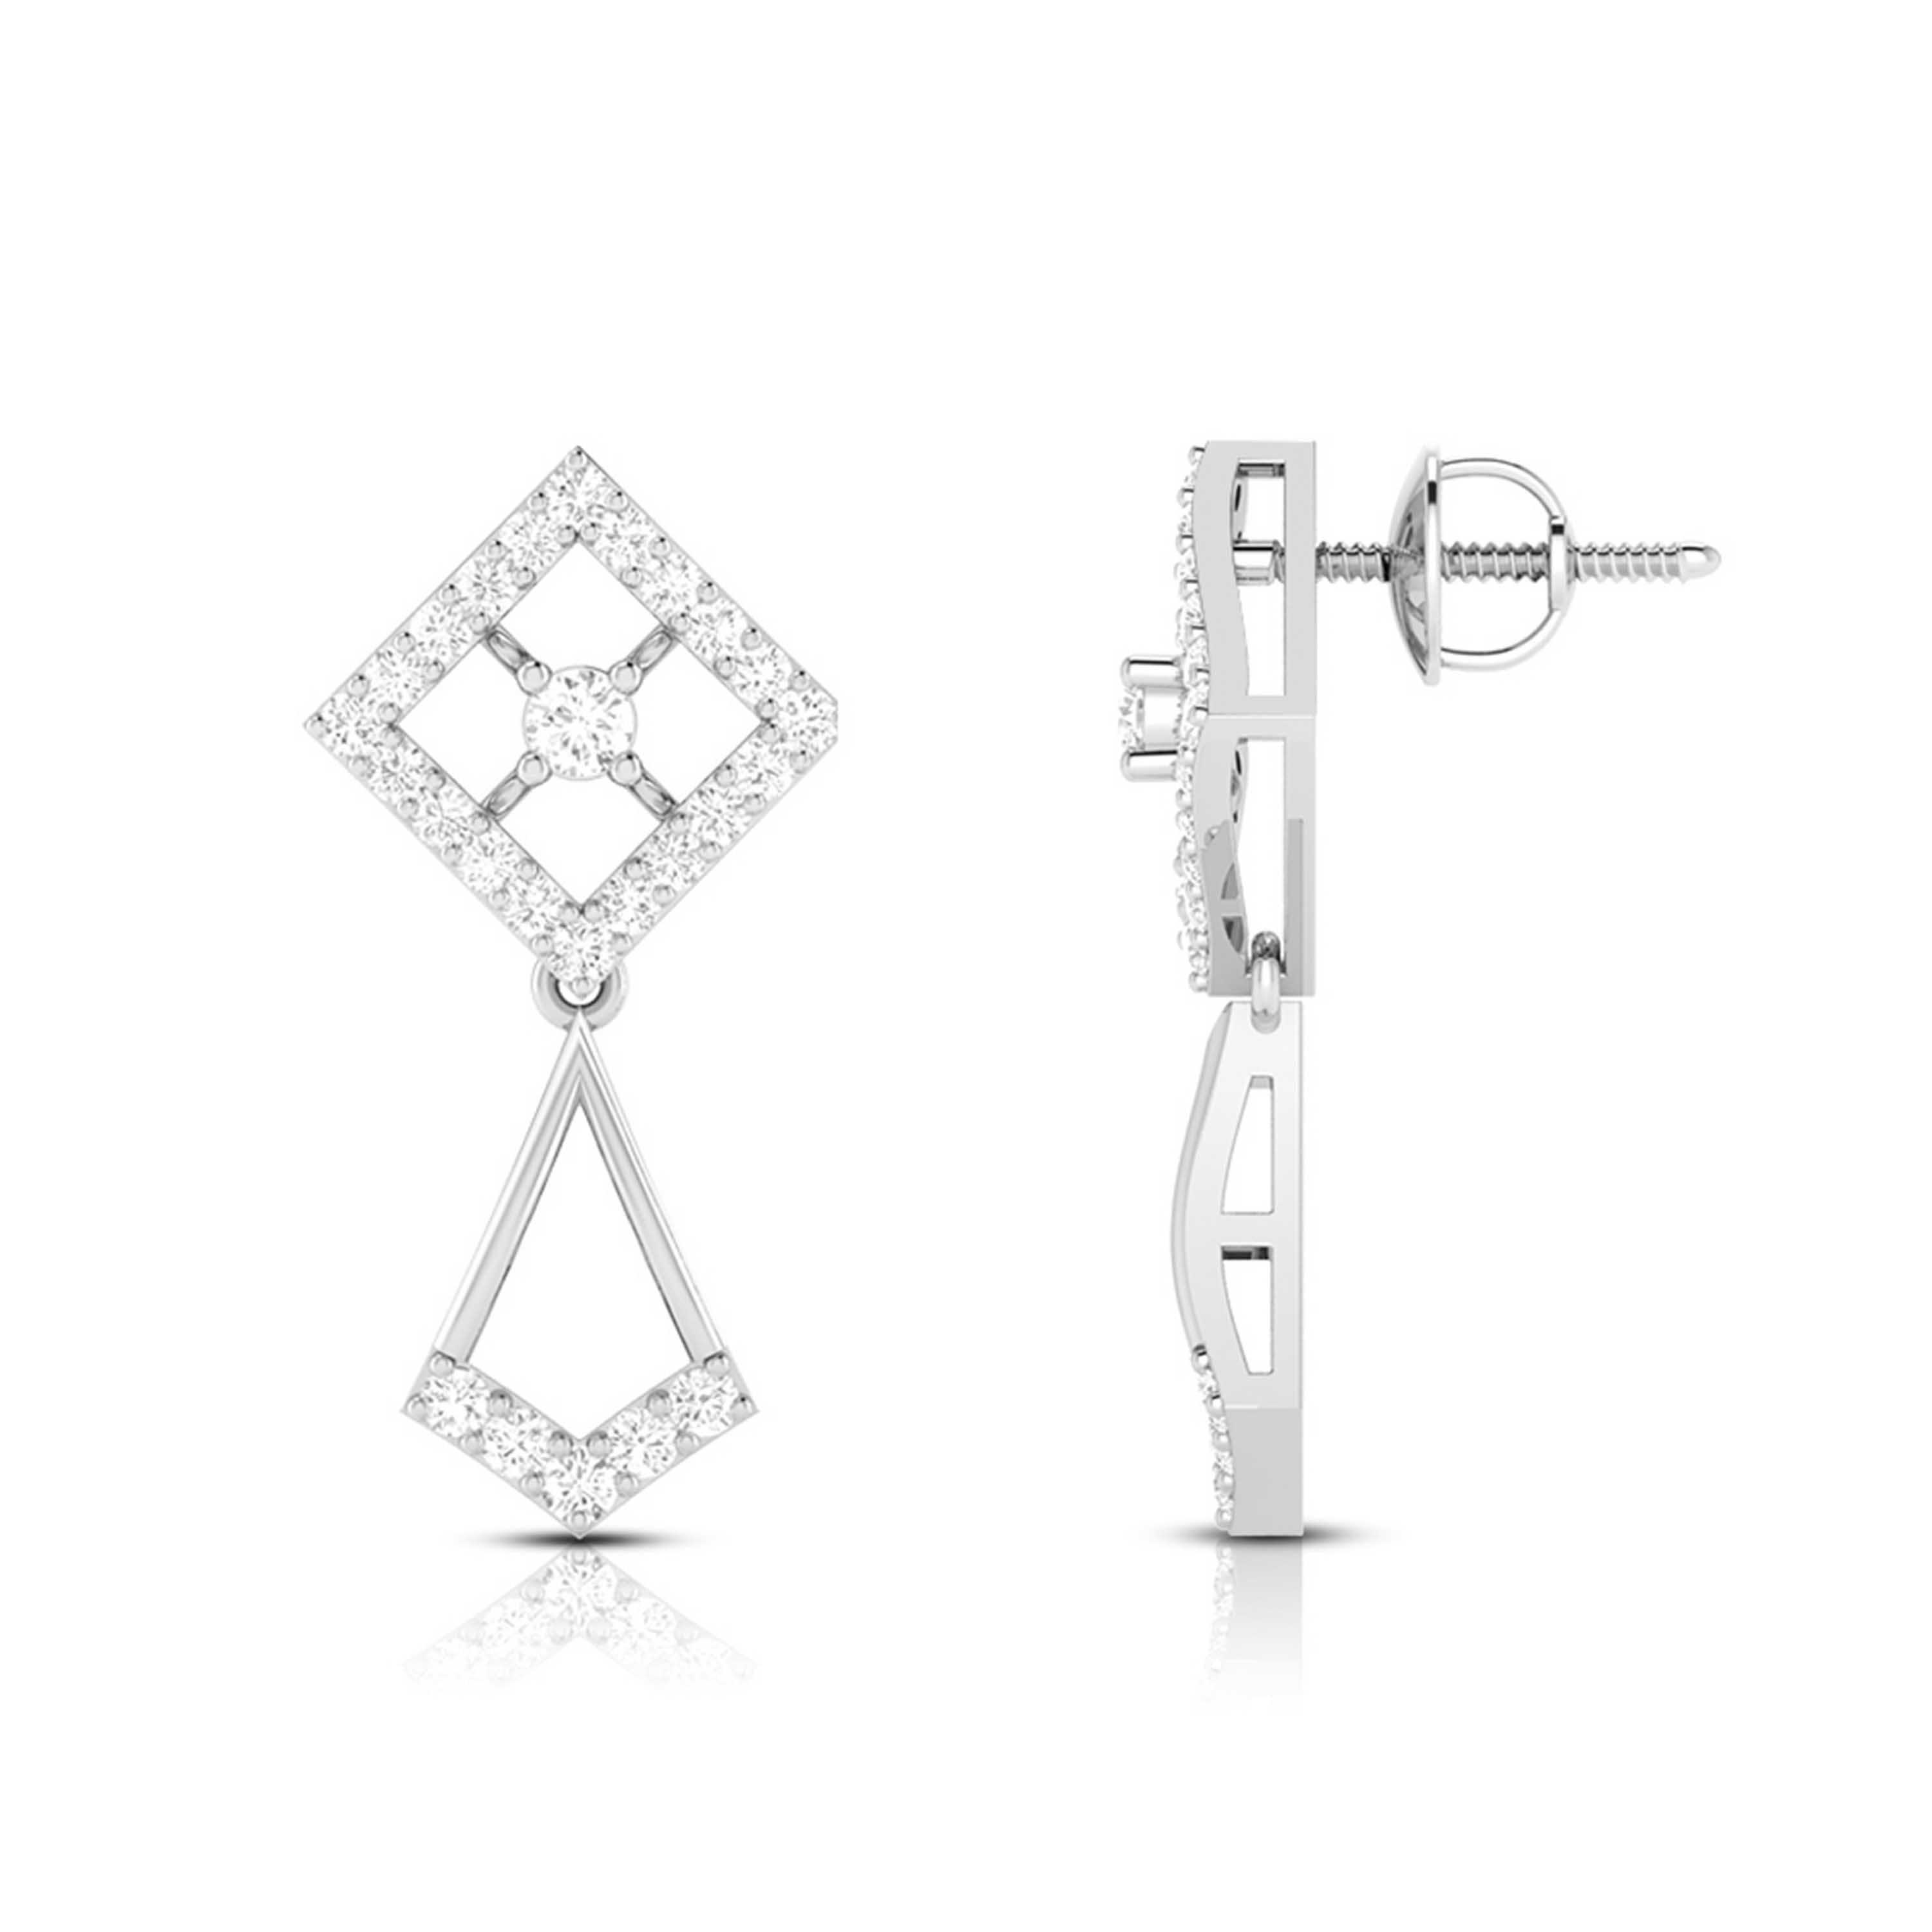 Shop Platinum Earrings for Women | Angara